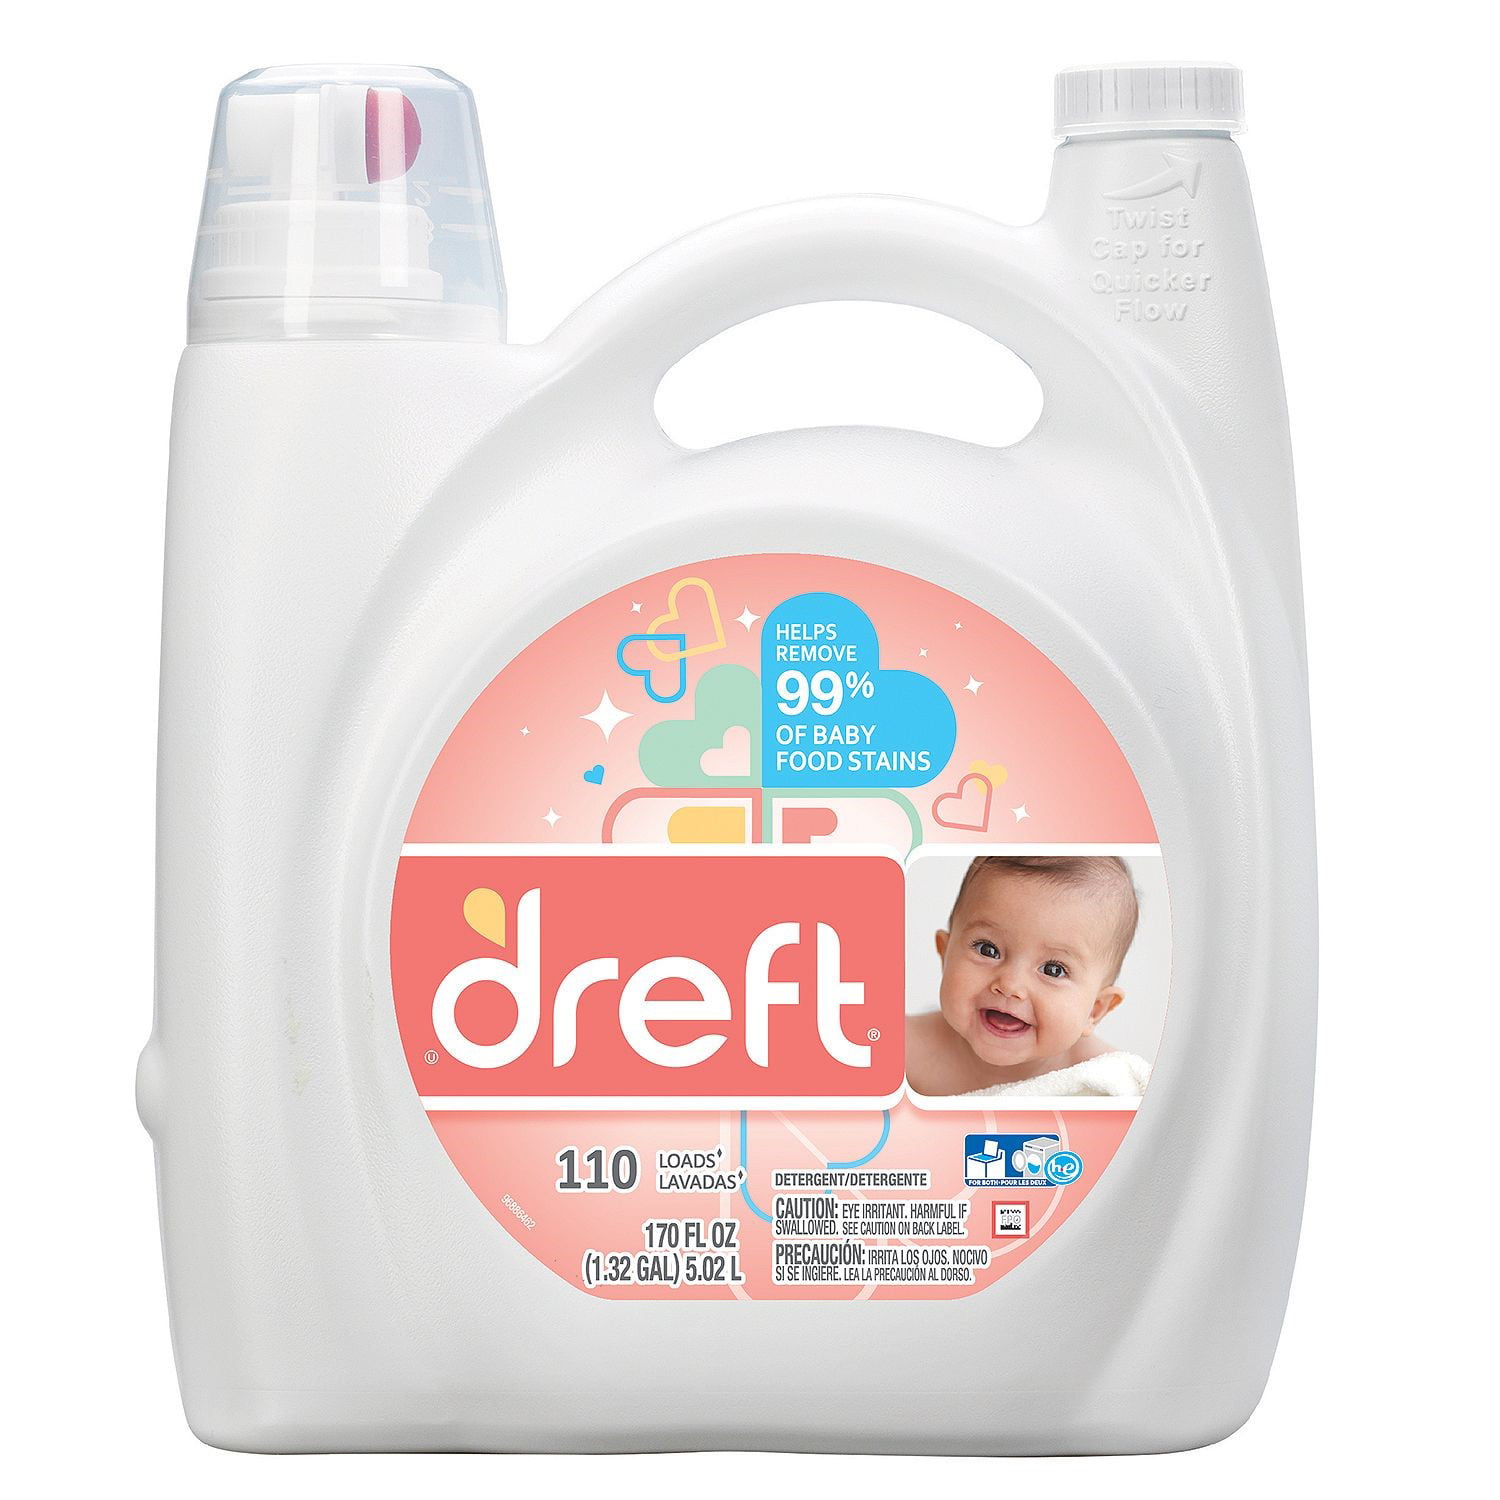 dreft-he-liquid-laundry-detergent-170-fl-oz-walmart-walmart